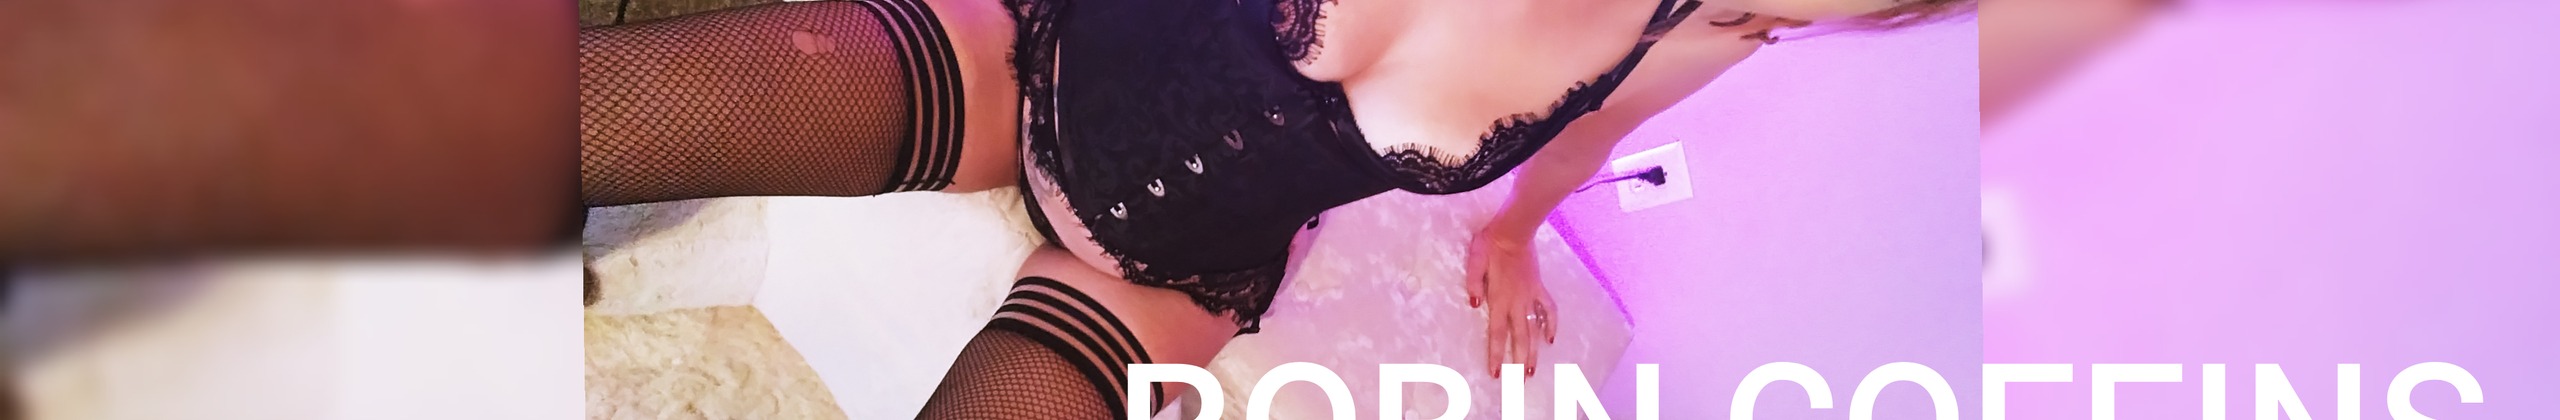 RobinCoffins - profile image